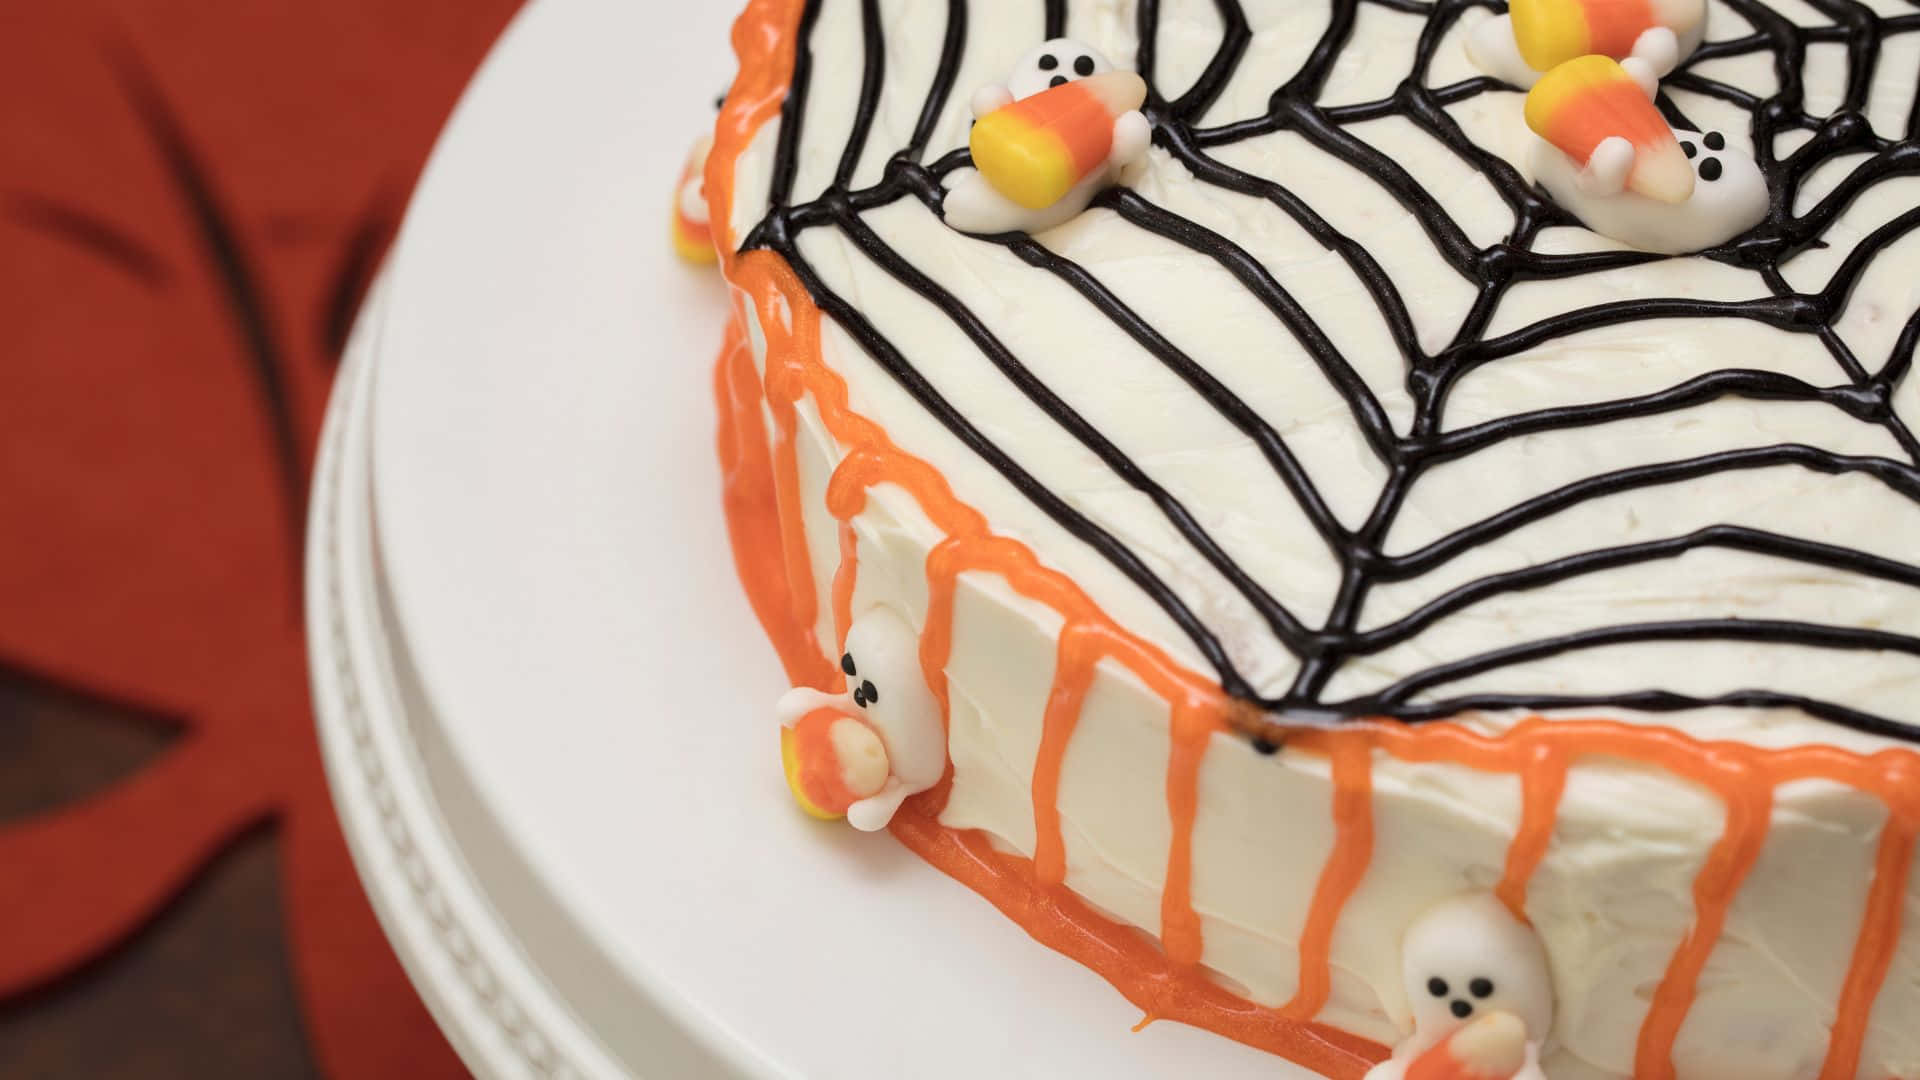 Trick or Treat! Enjoy this delicious Halloween Cake. Wallpaper